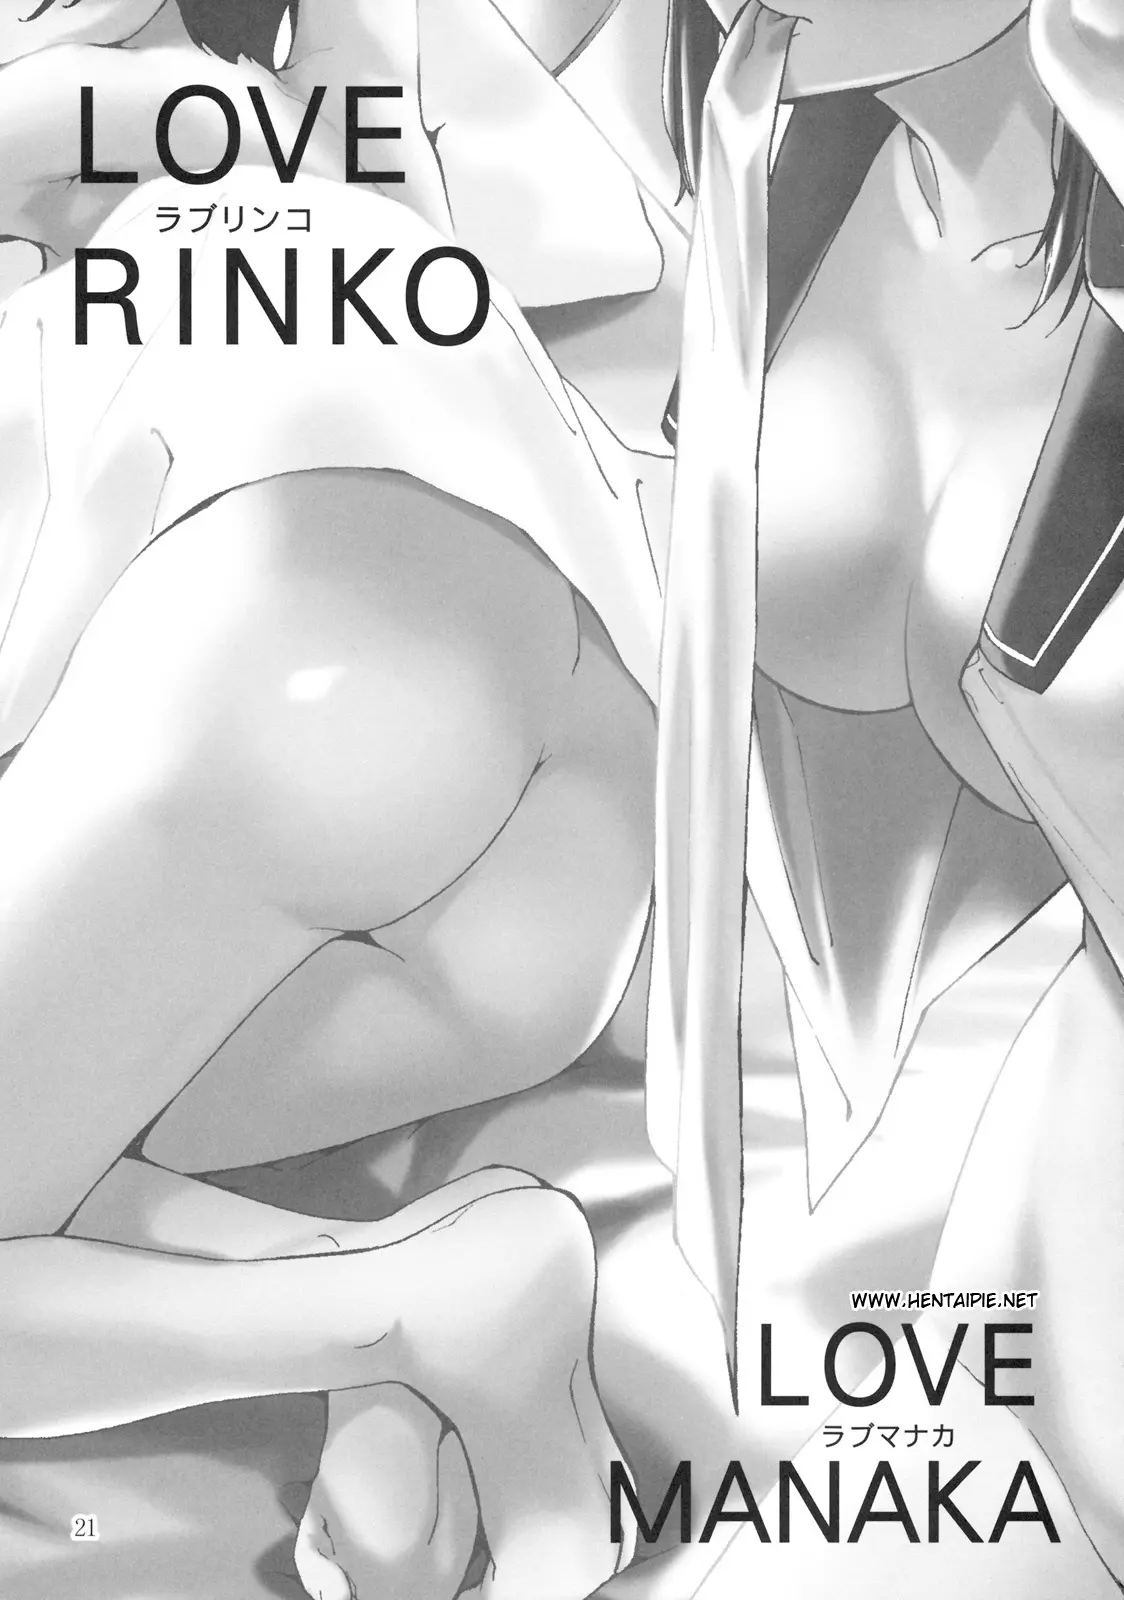 LOVE RINKO+LOVE MANAKA - Foto 21